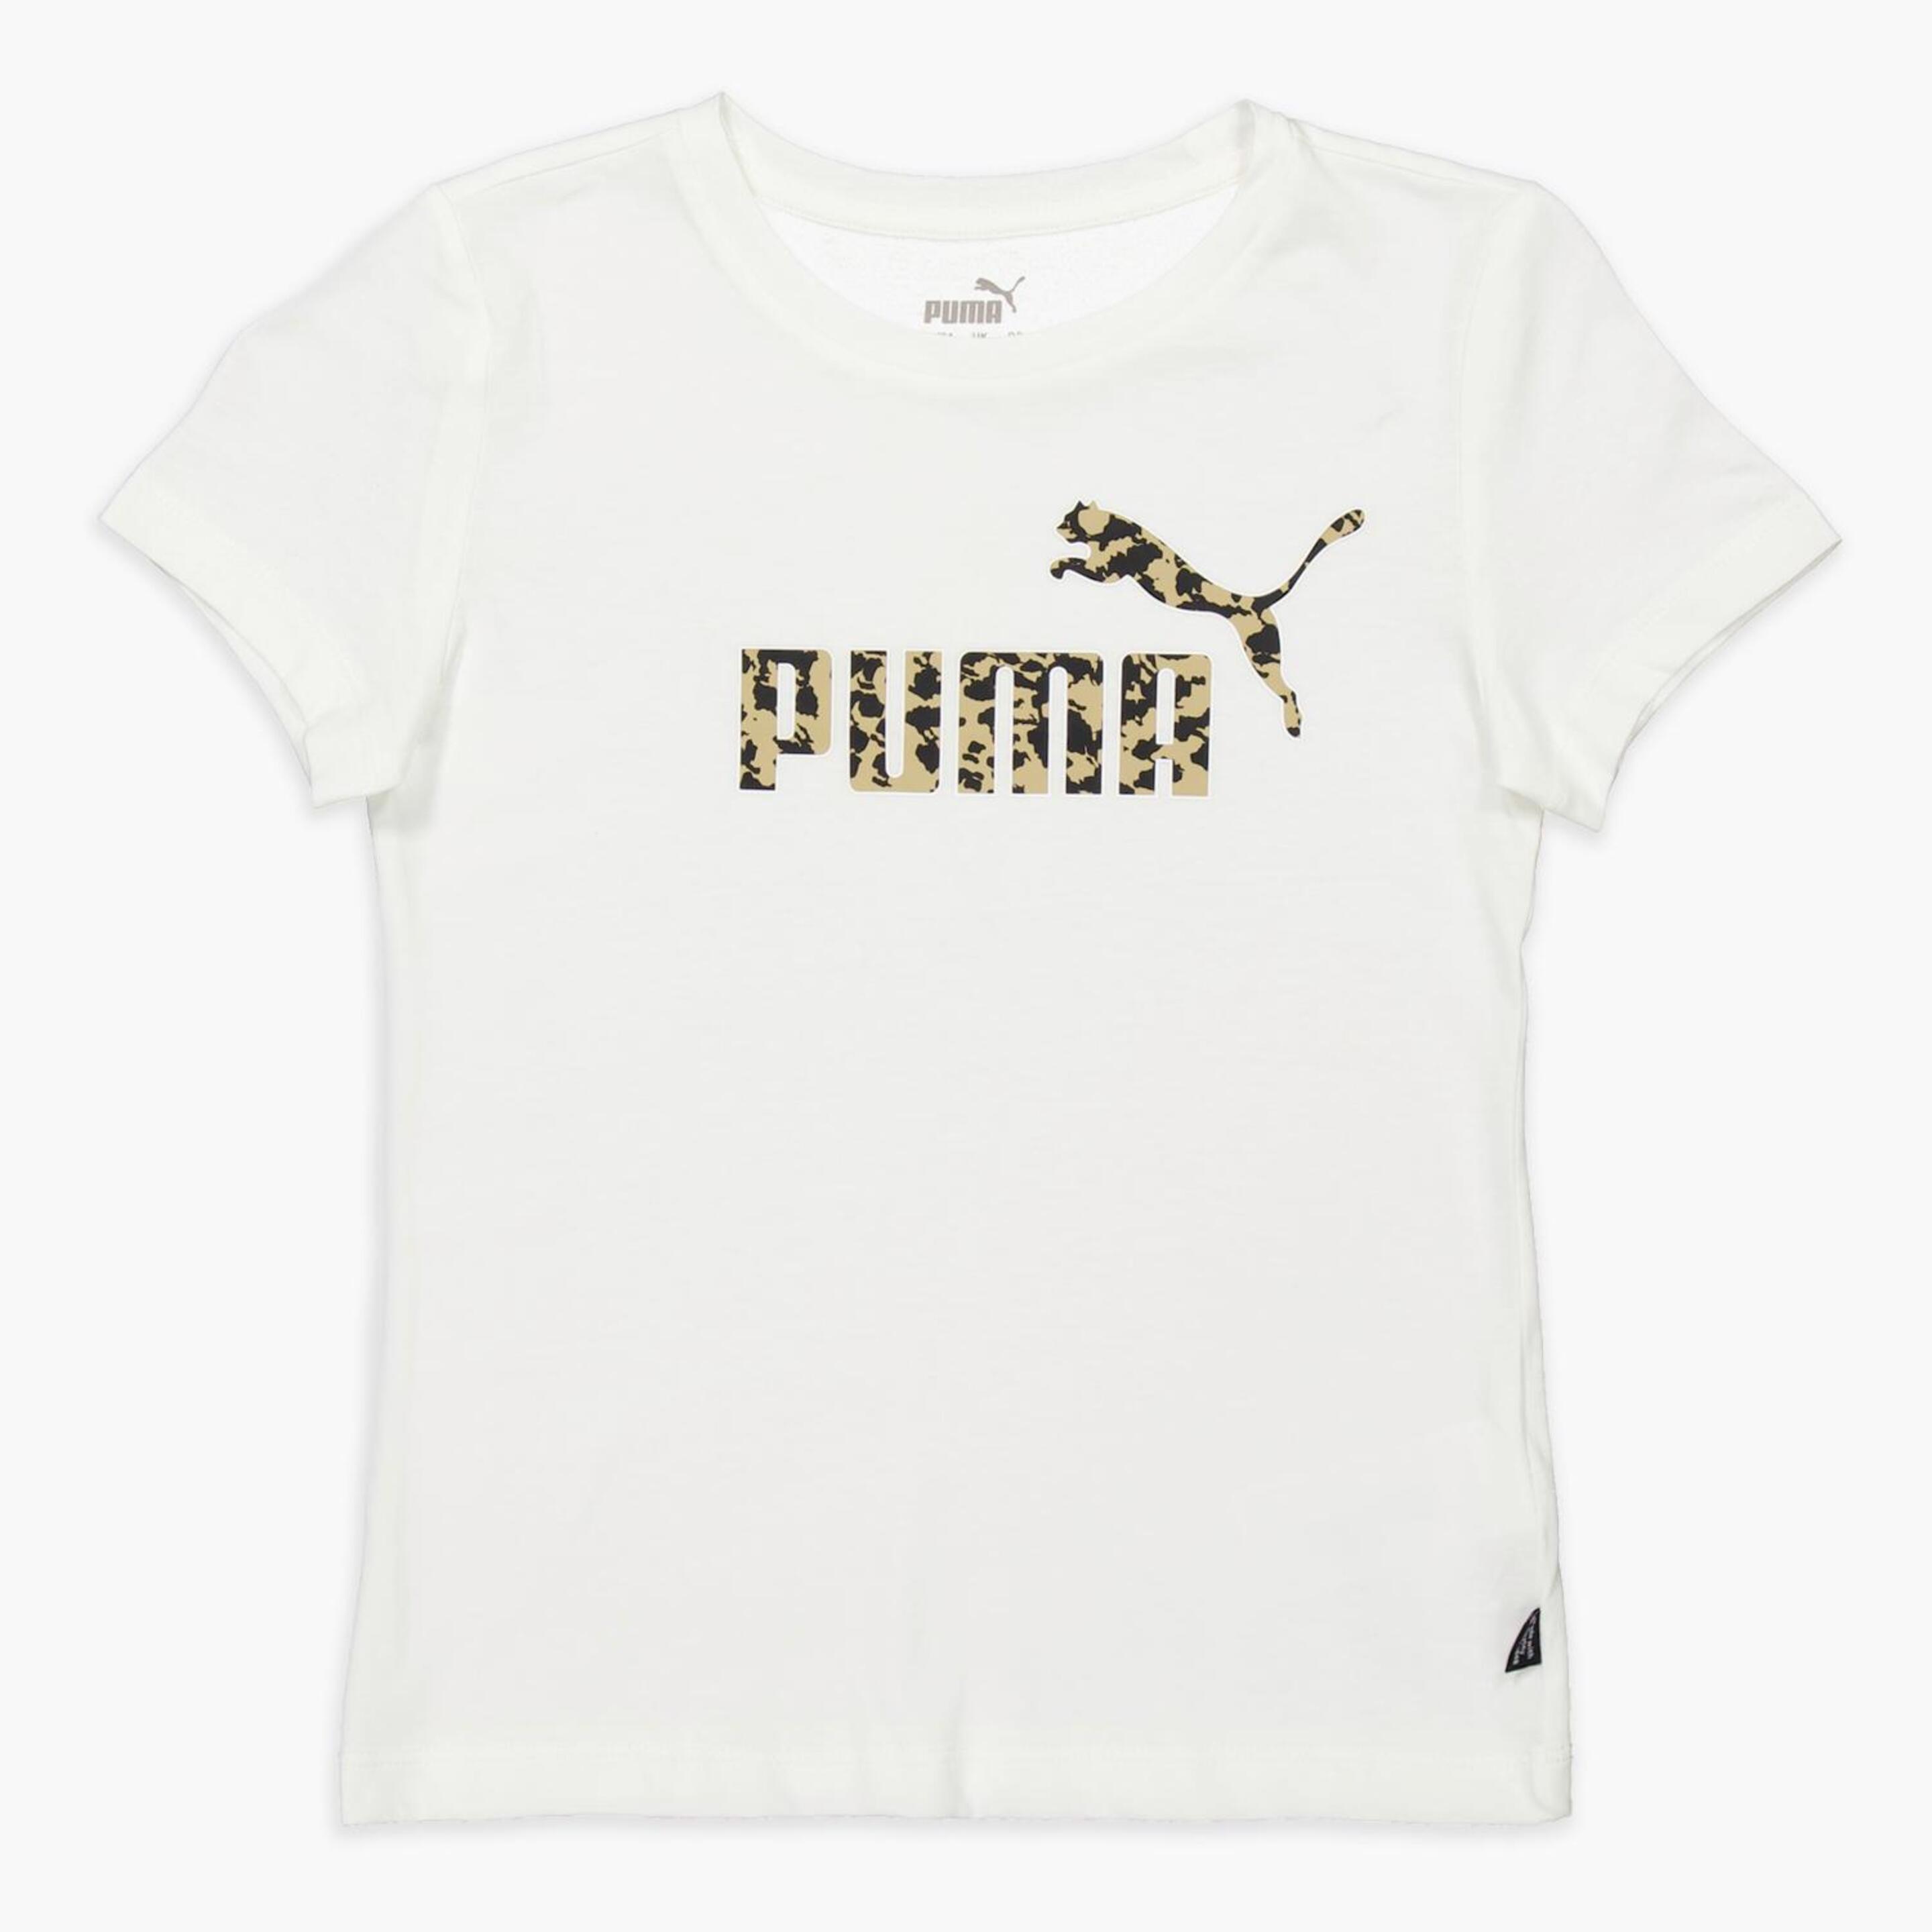 T-shirt Puma - blanco - T-shirt Rapariga